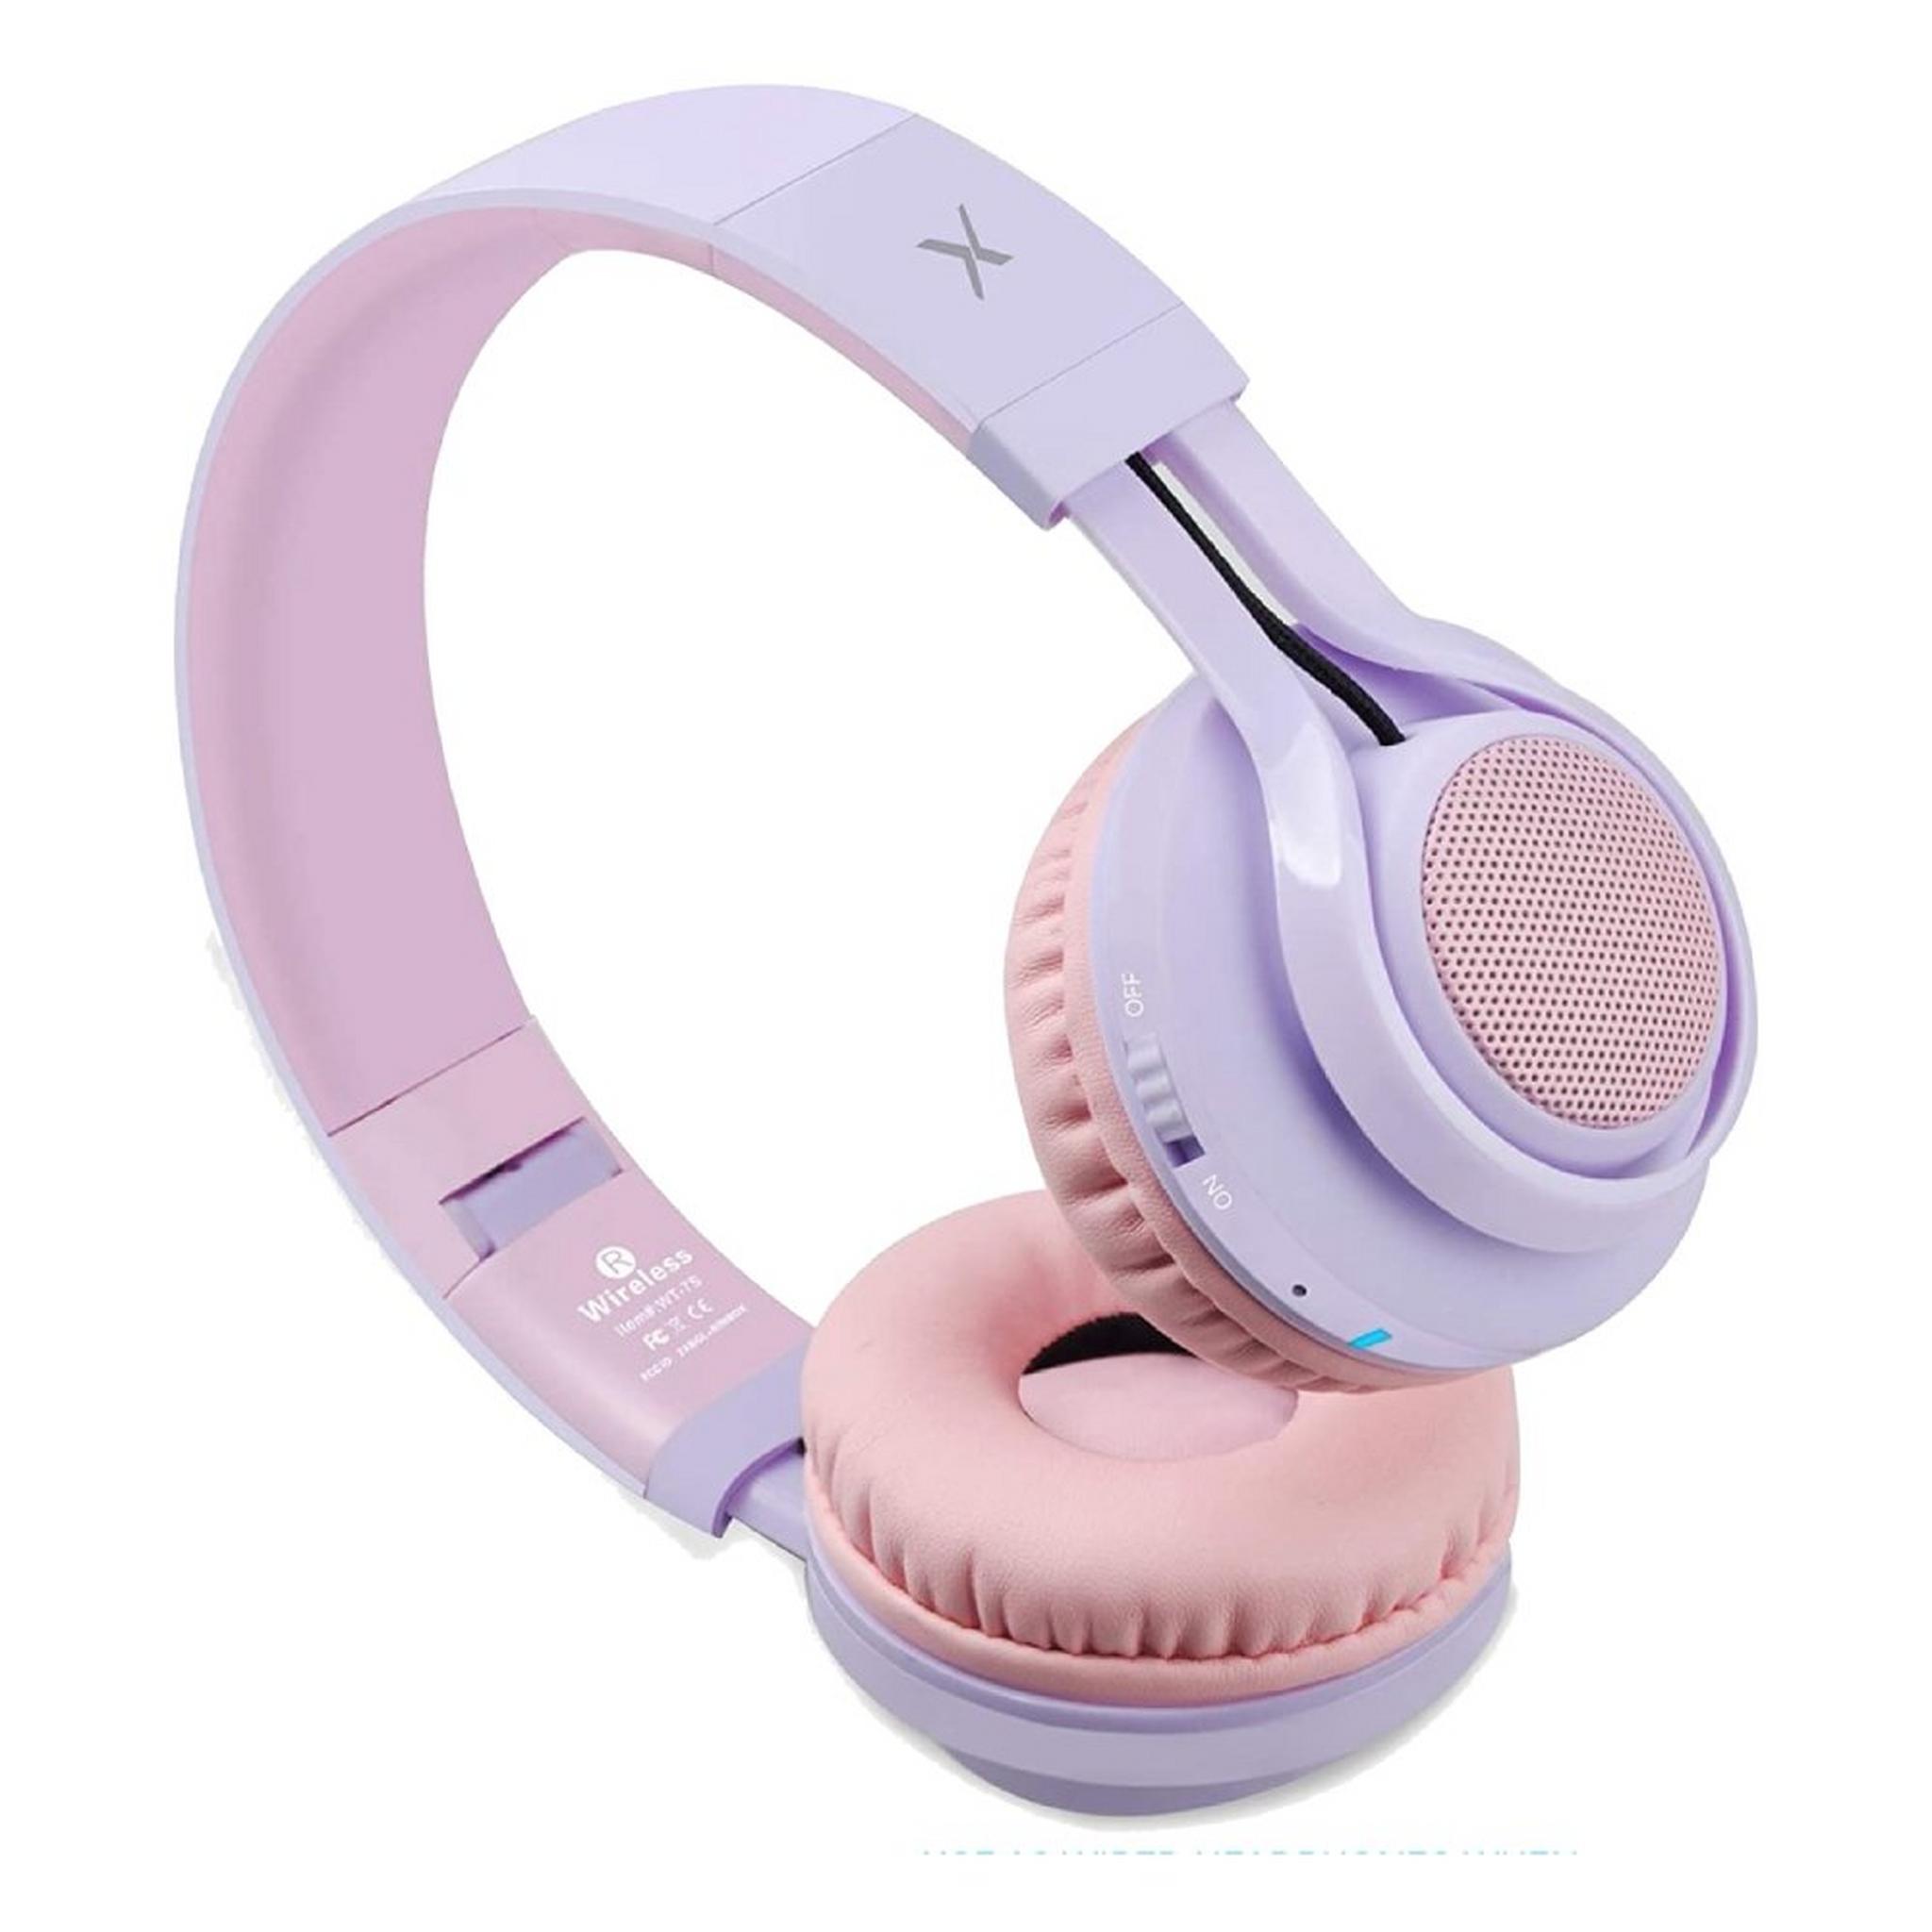 Riwbox Kids LED Wireless Headphones - Purple/Pink